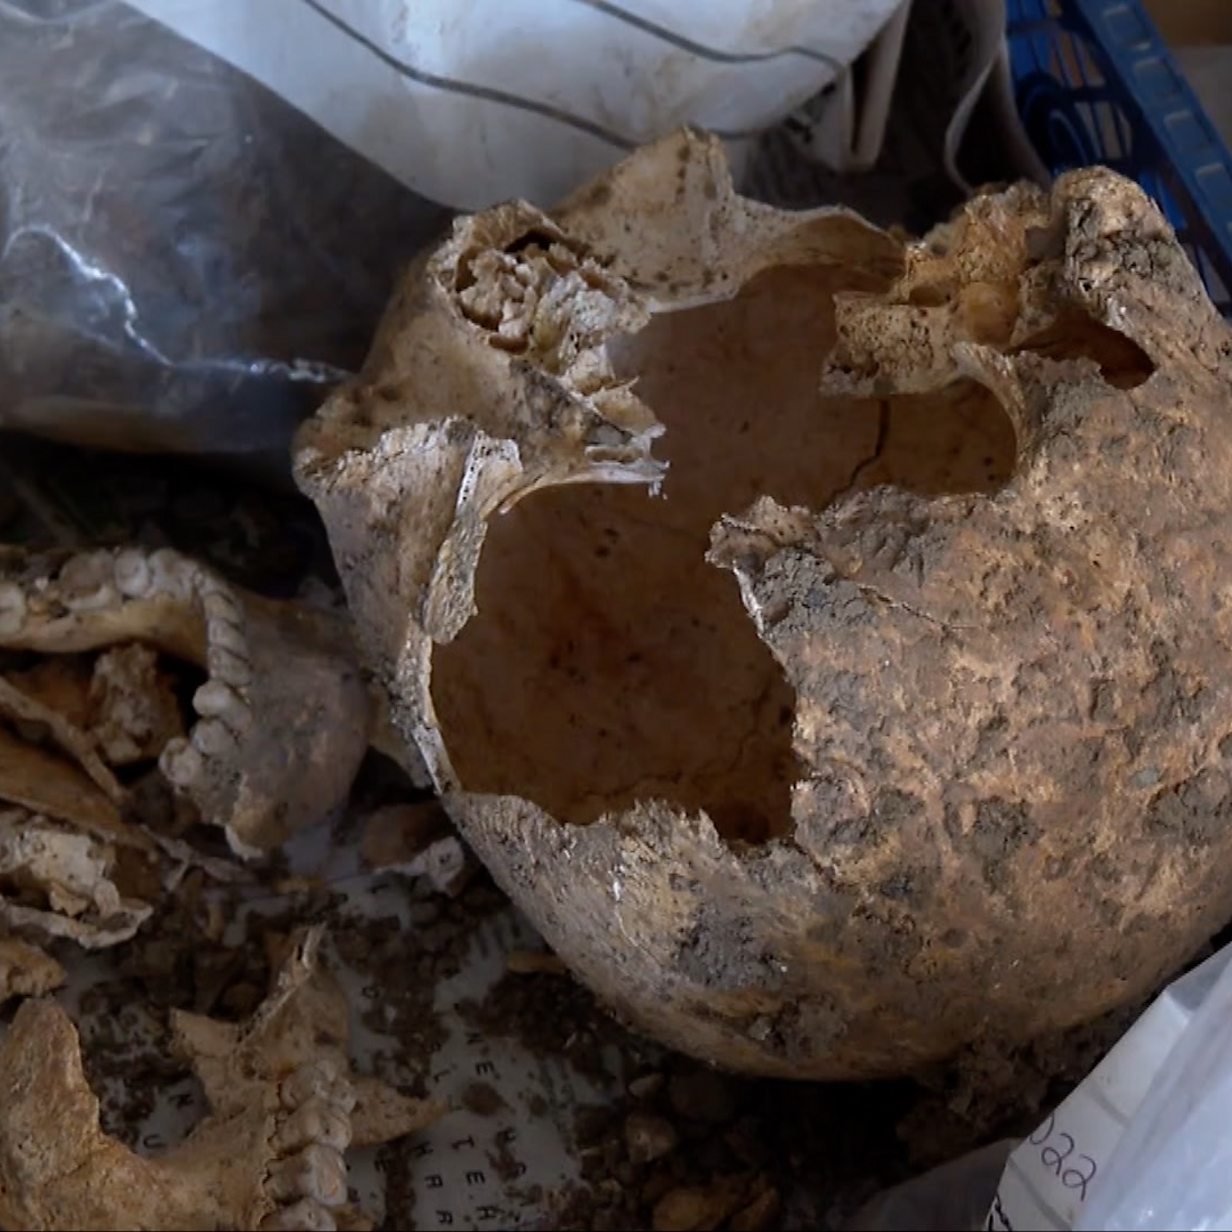 Hundreds of skeletons found under Haverfordwest store - BBC News